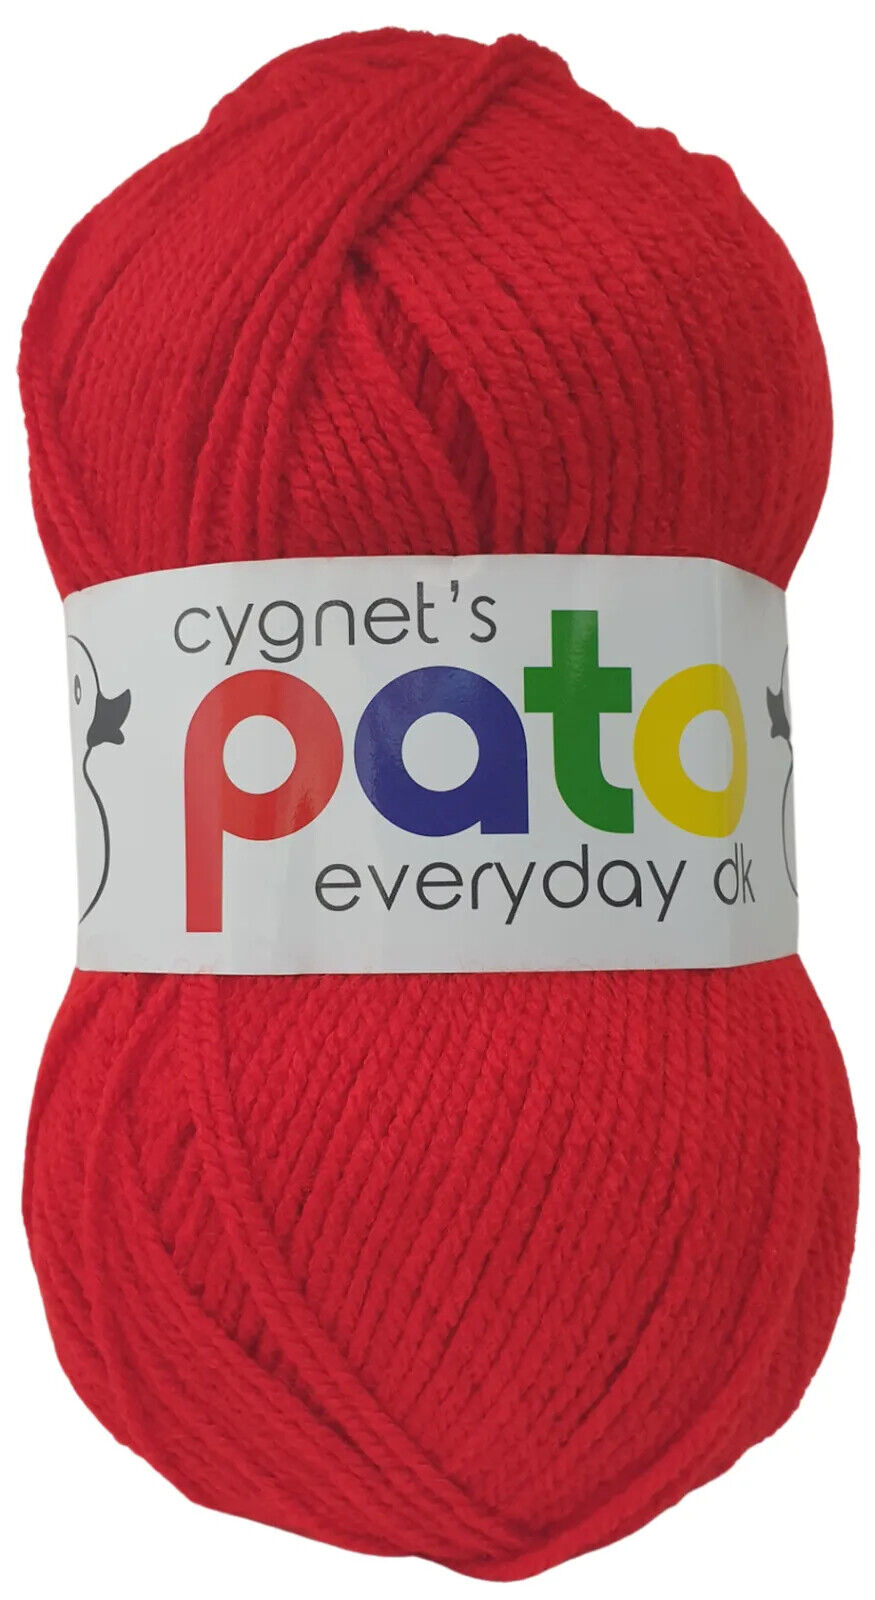 Cygnet Pato DK Knitting Wool / Yarn 100 gram ball - Red - 994